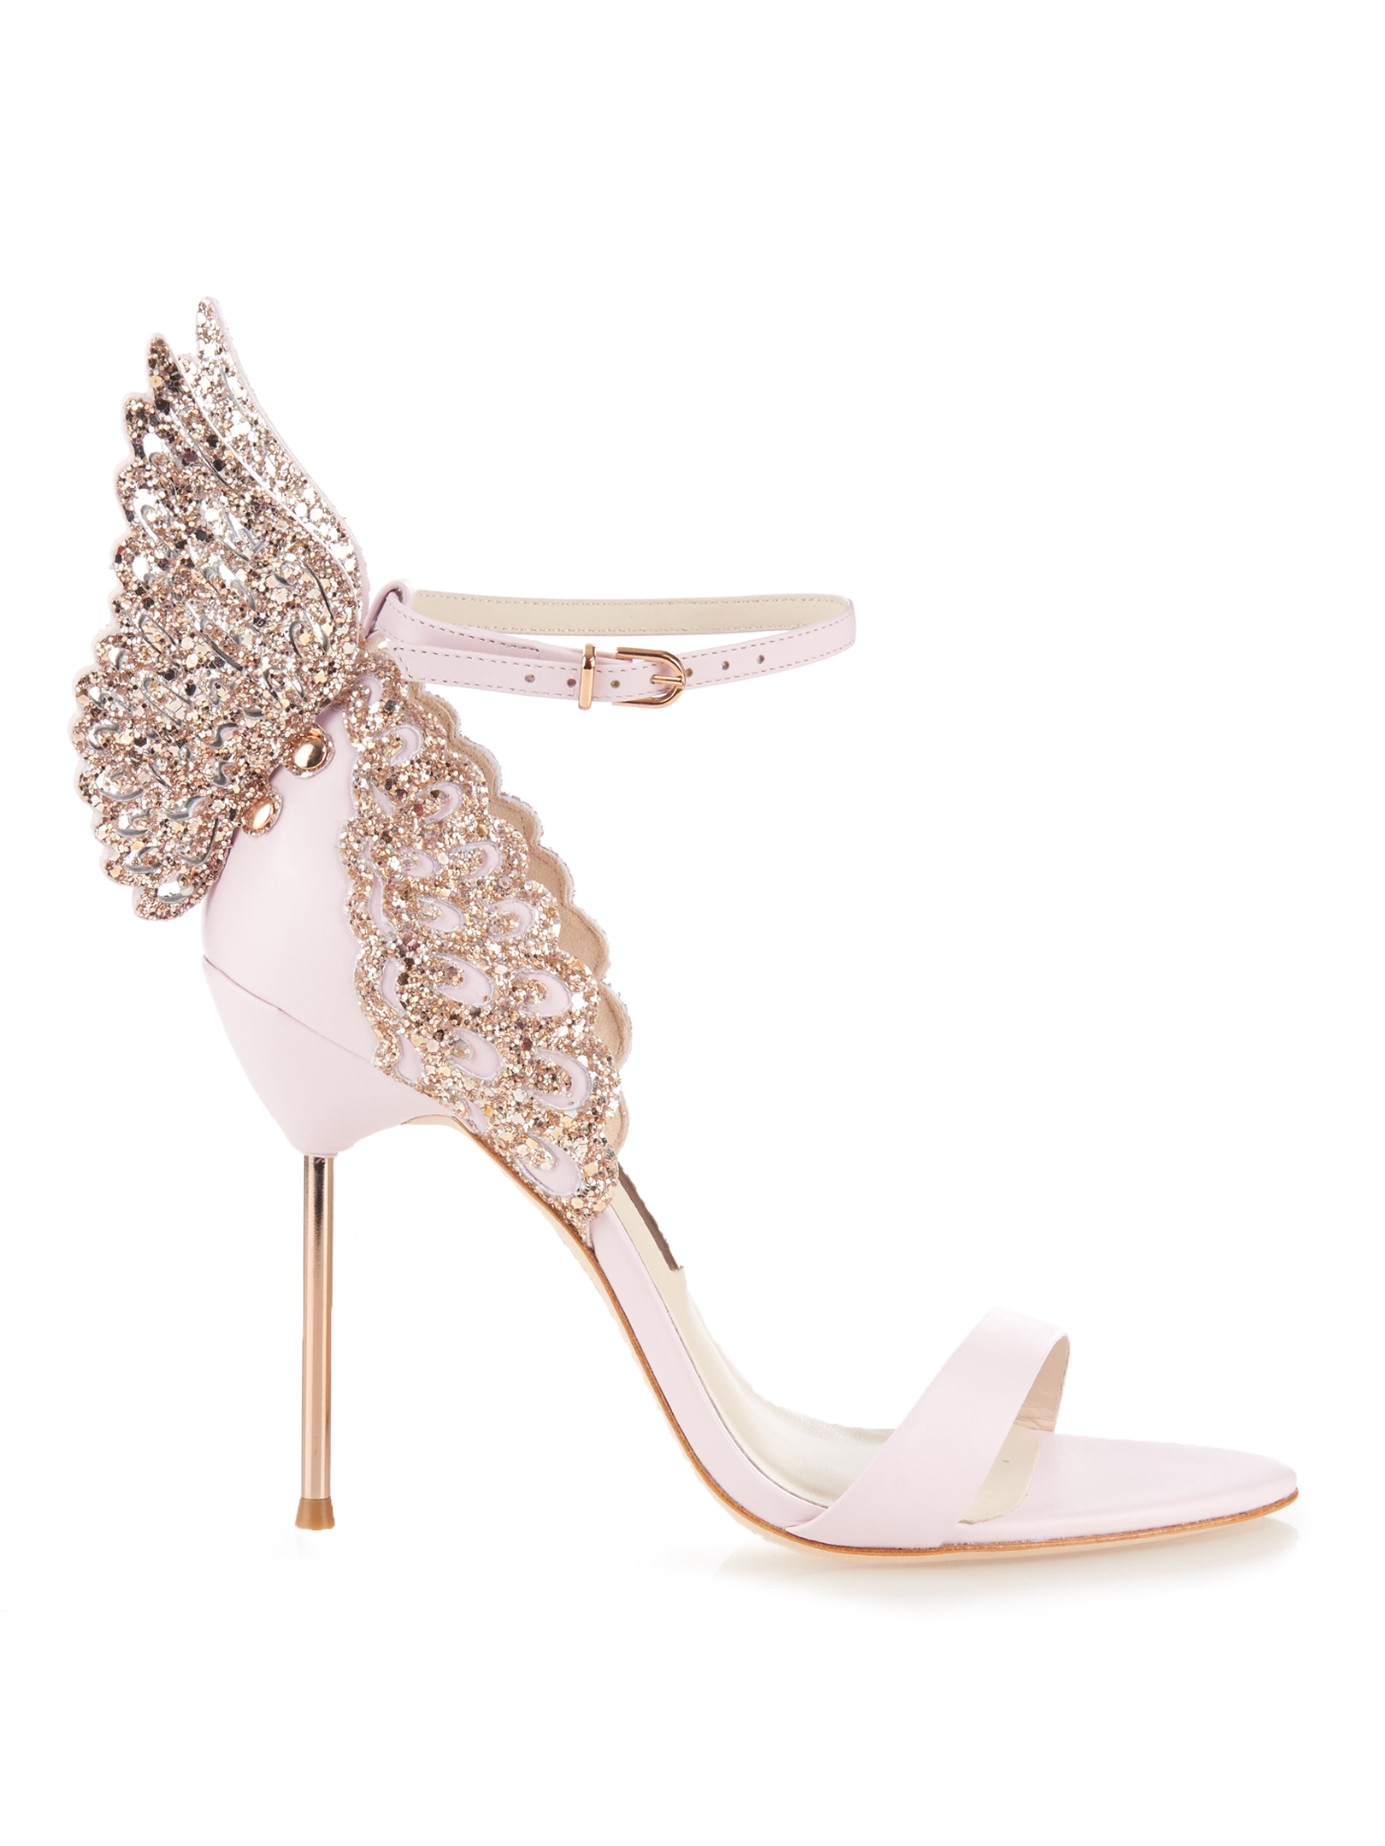 Lyst - Sophia Webster Evangeline Glitter Angel-wing Sandals in Pink